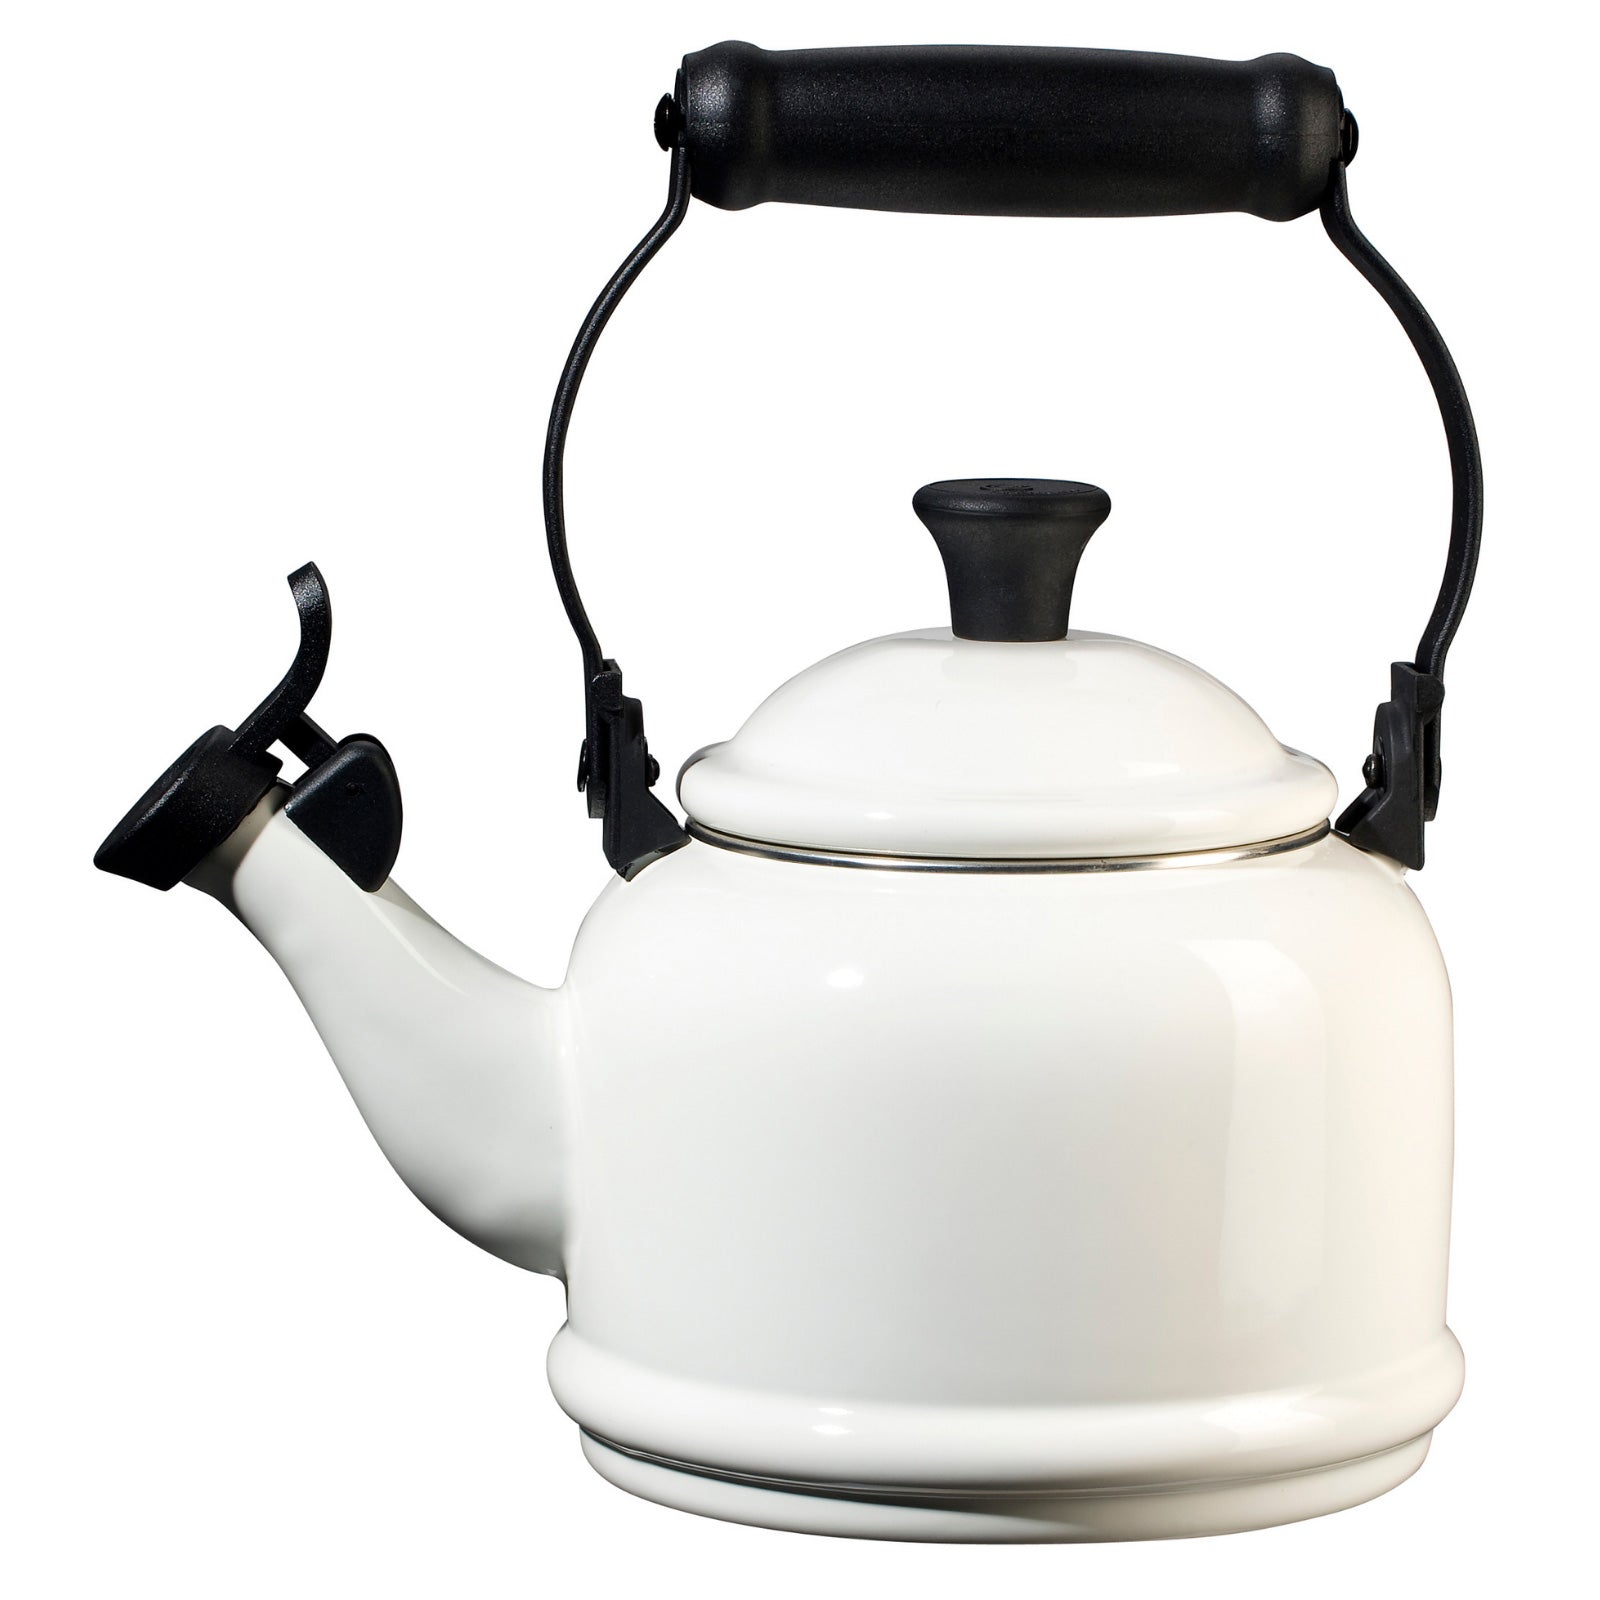 Stovetop Teapot, Whistling Tea Kettle Safe Fast Heating For